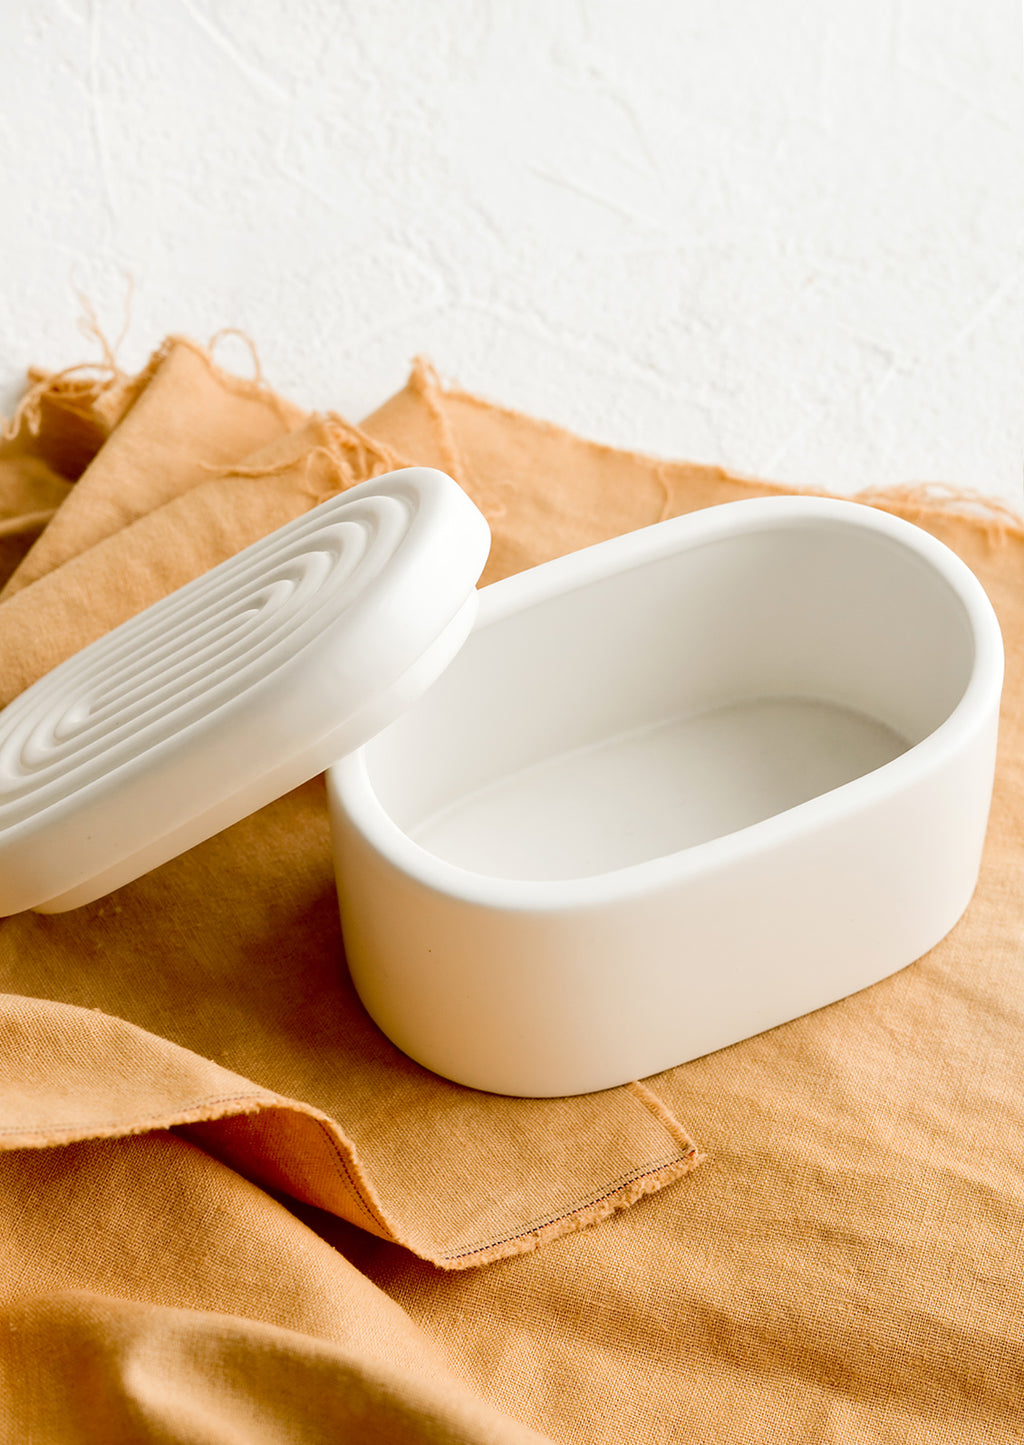 1: An oval-shaped white ceramic storage box.